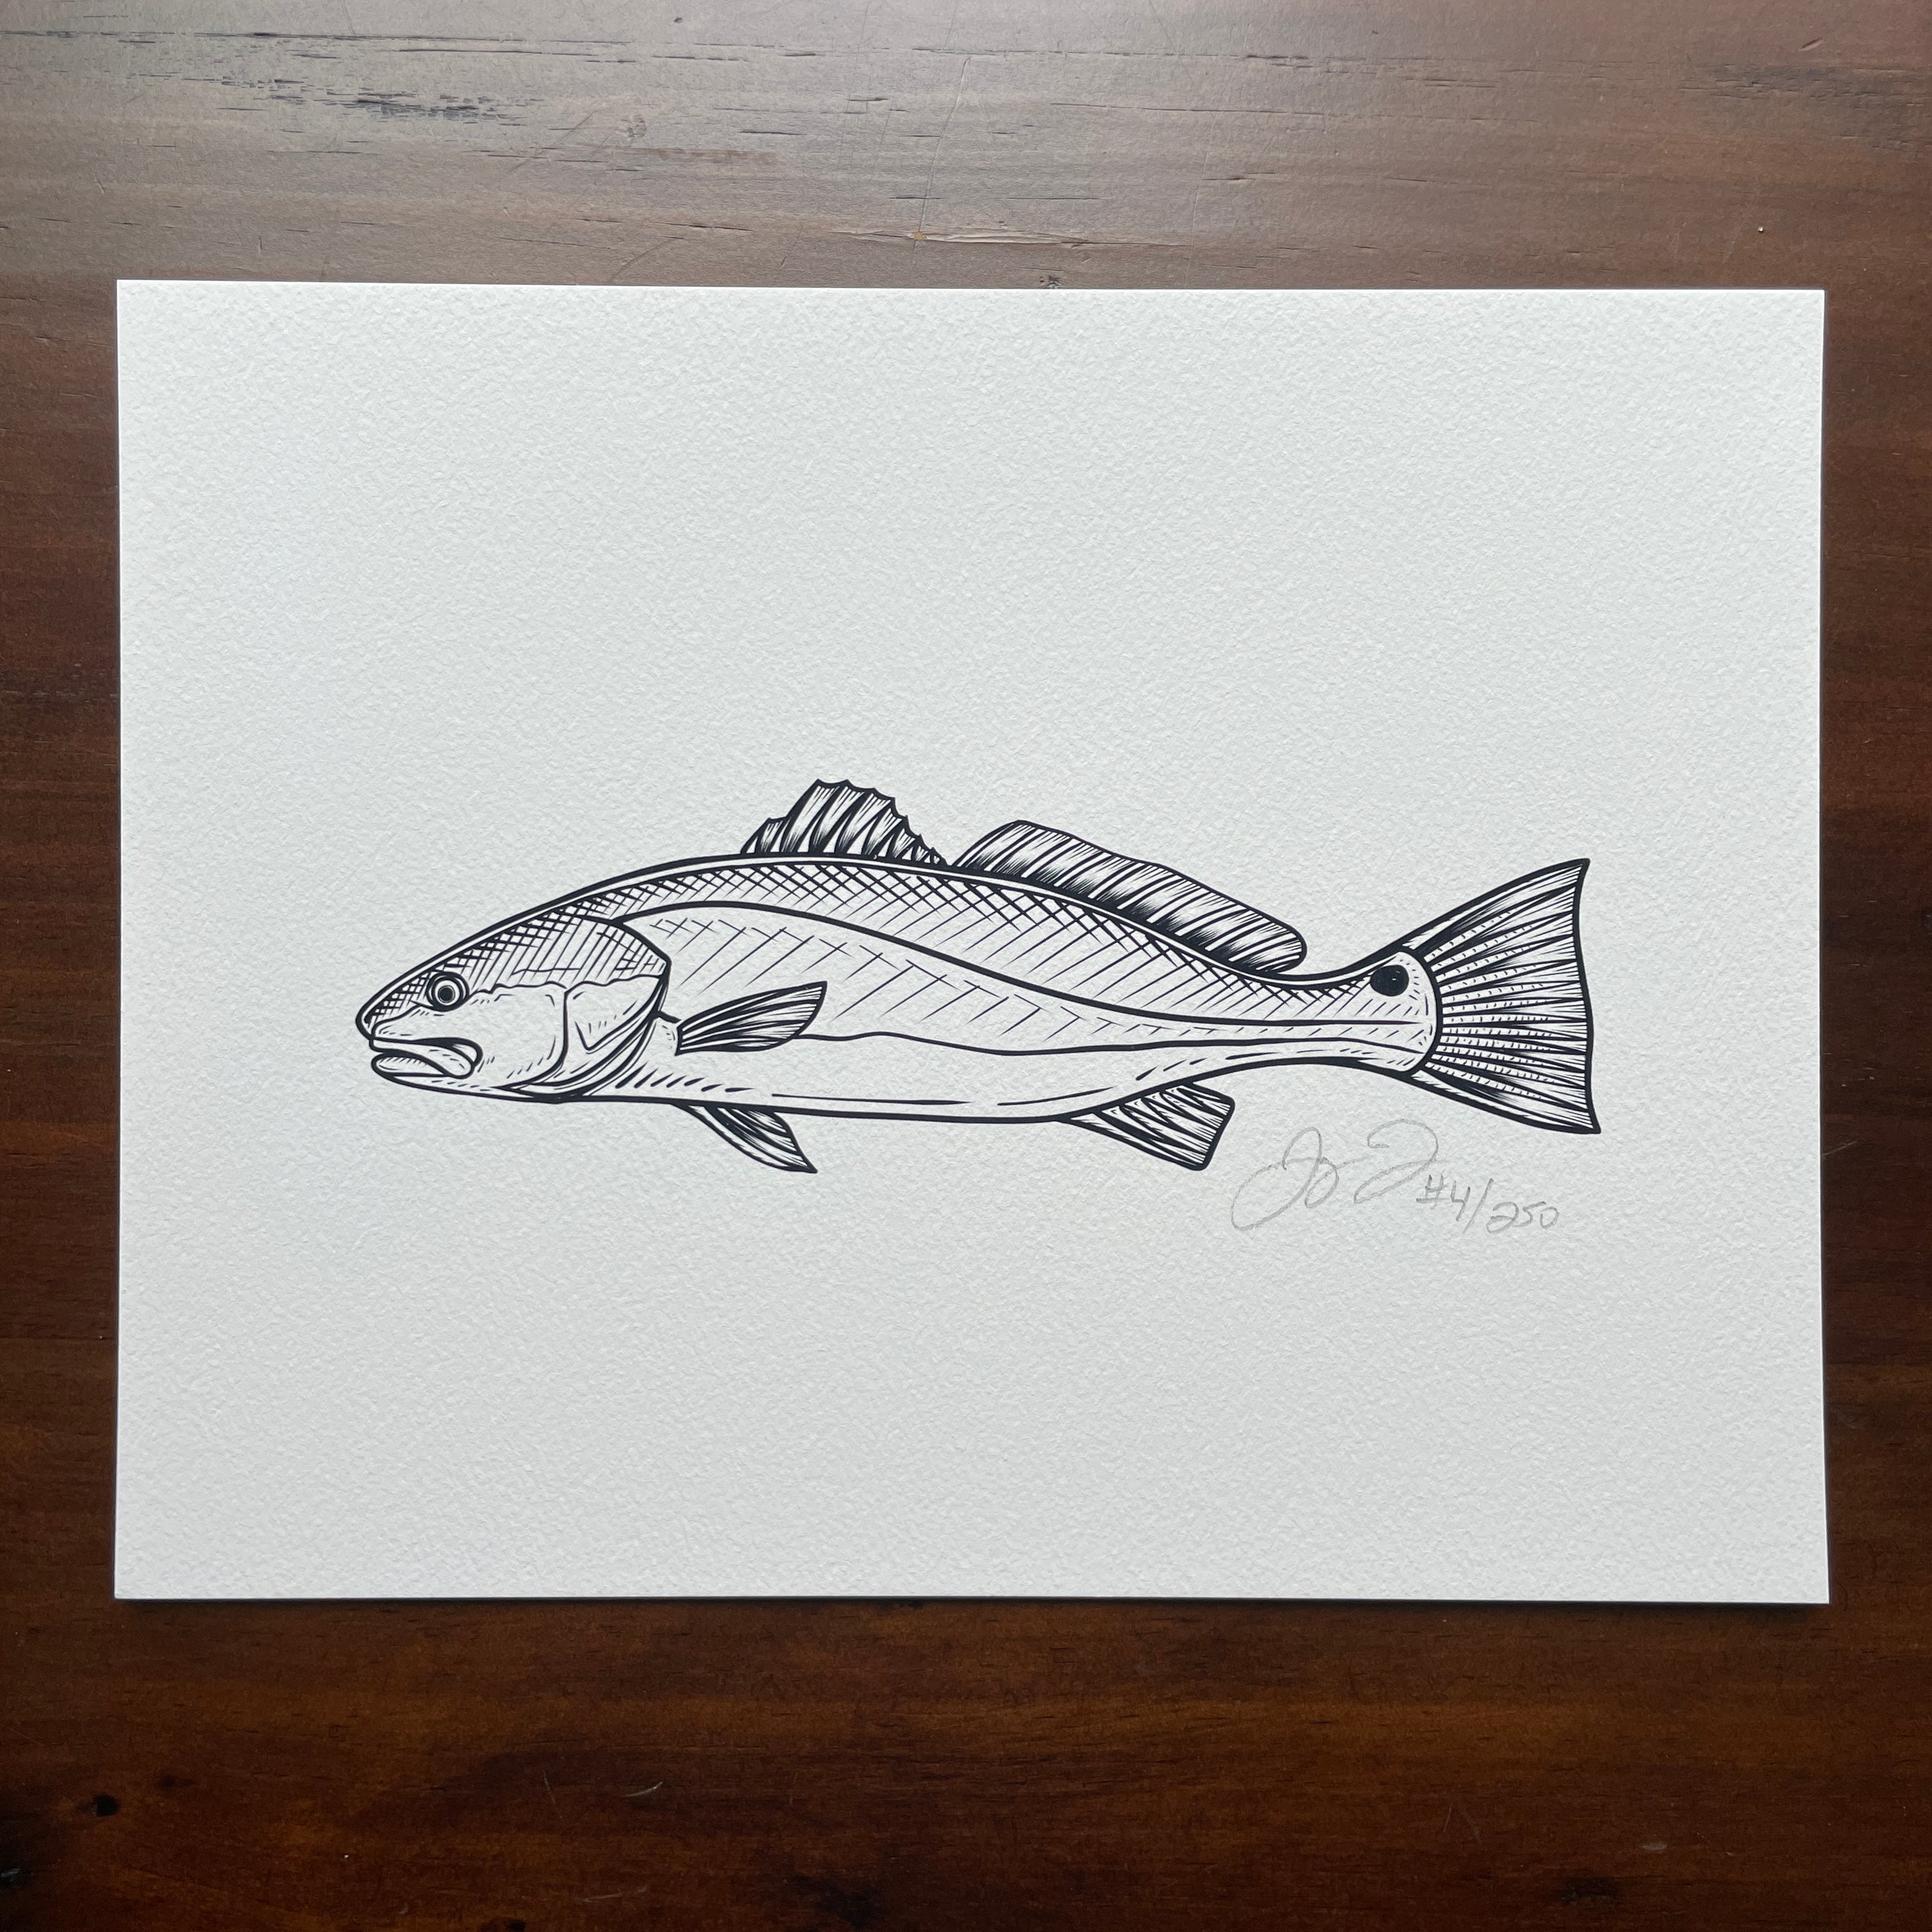 Redfish art paintings and drawings prints as fisherman gifts